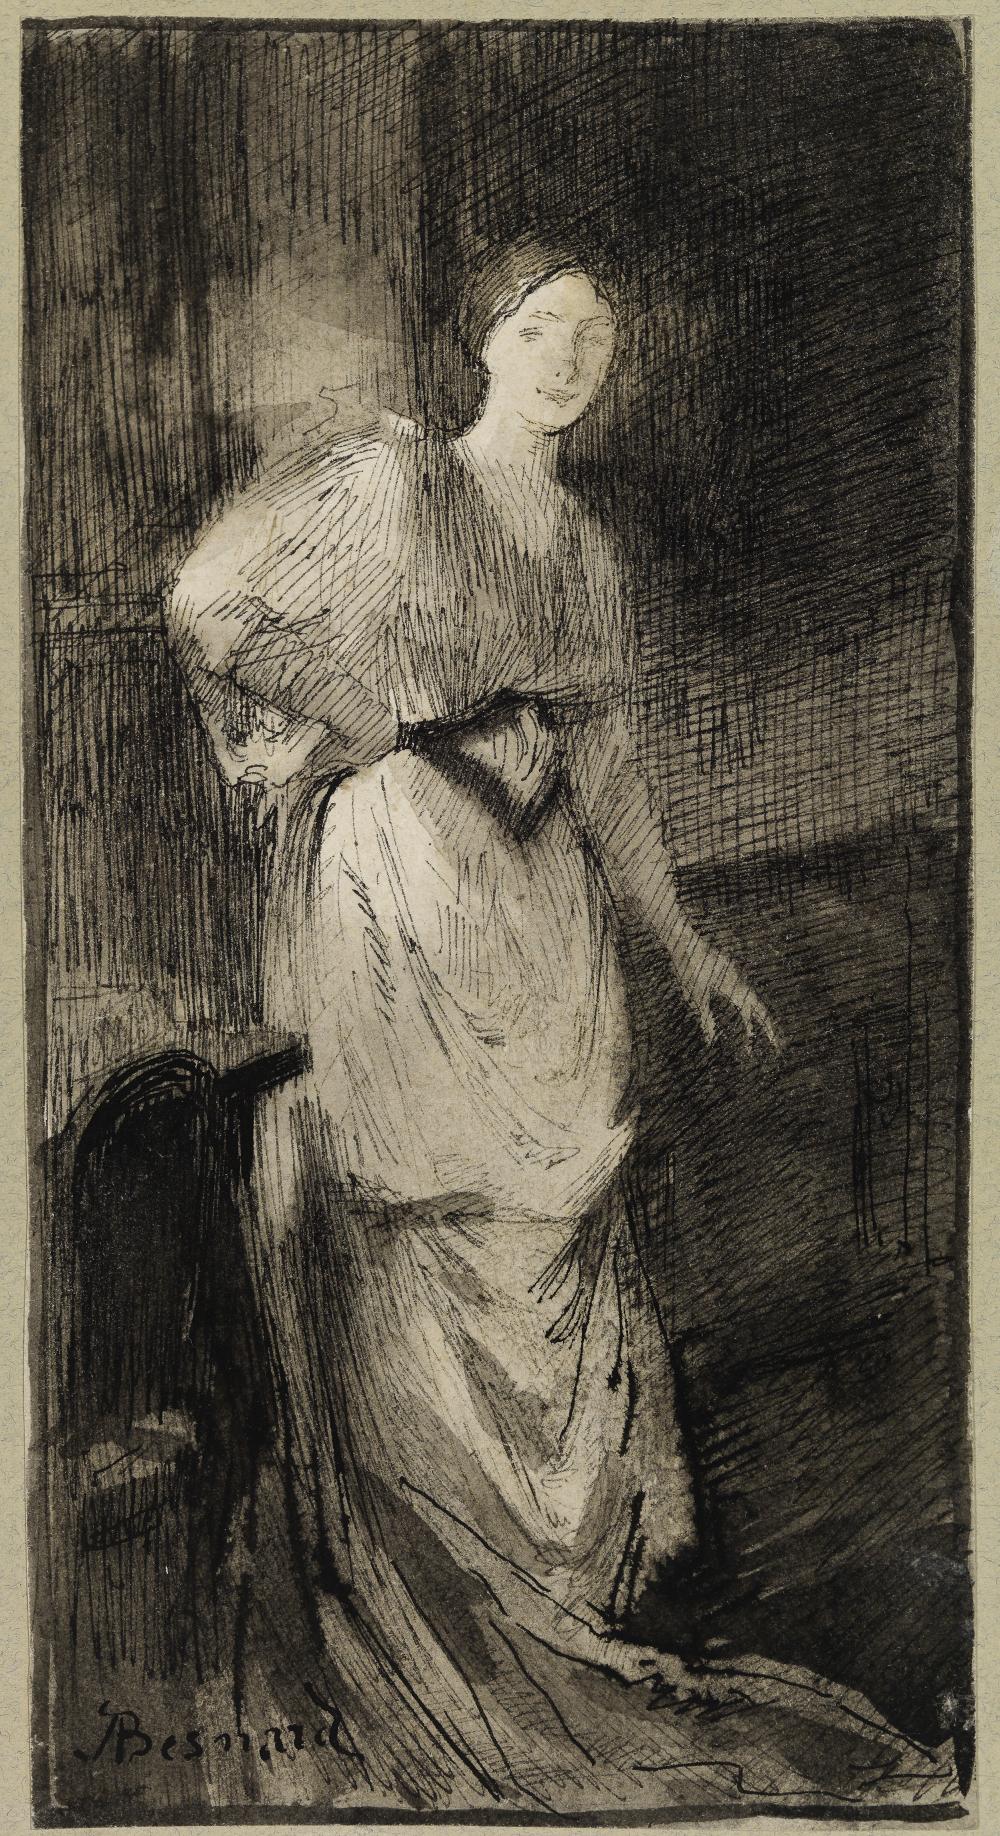 Albert Besnard, French (1849-1934), La Femme en jaune, ca. 1893